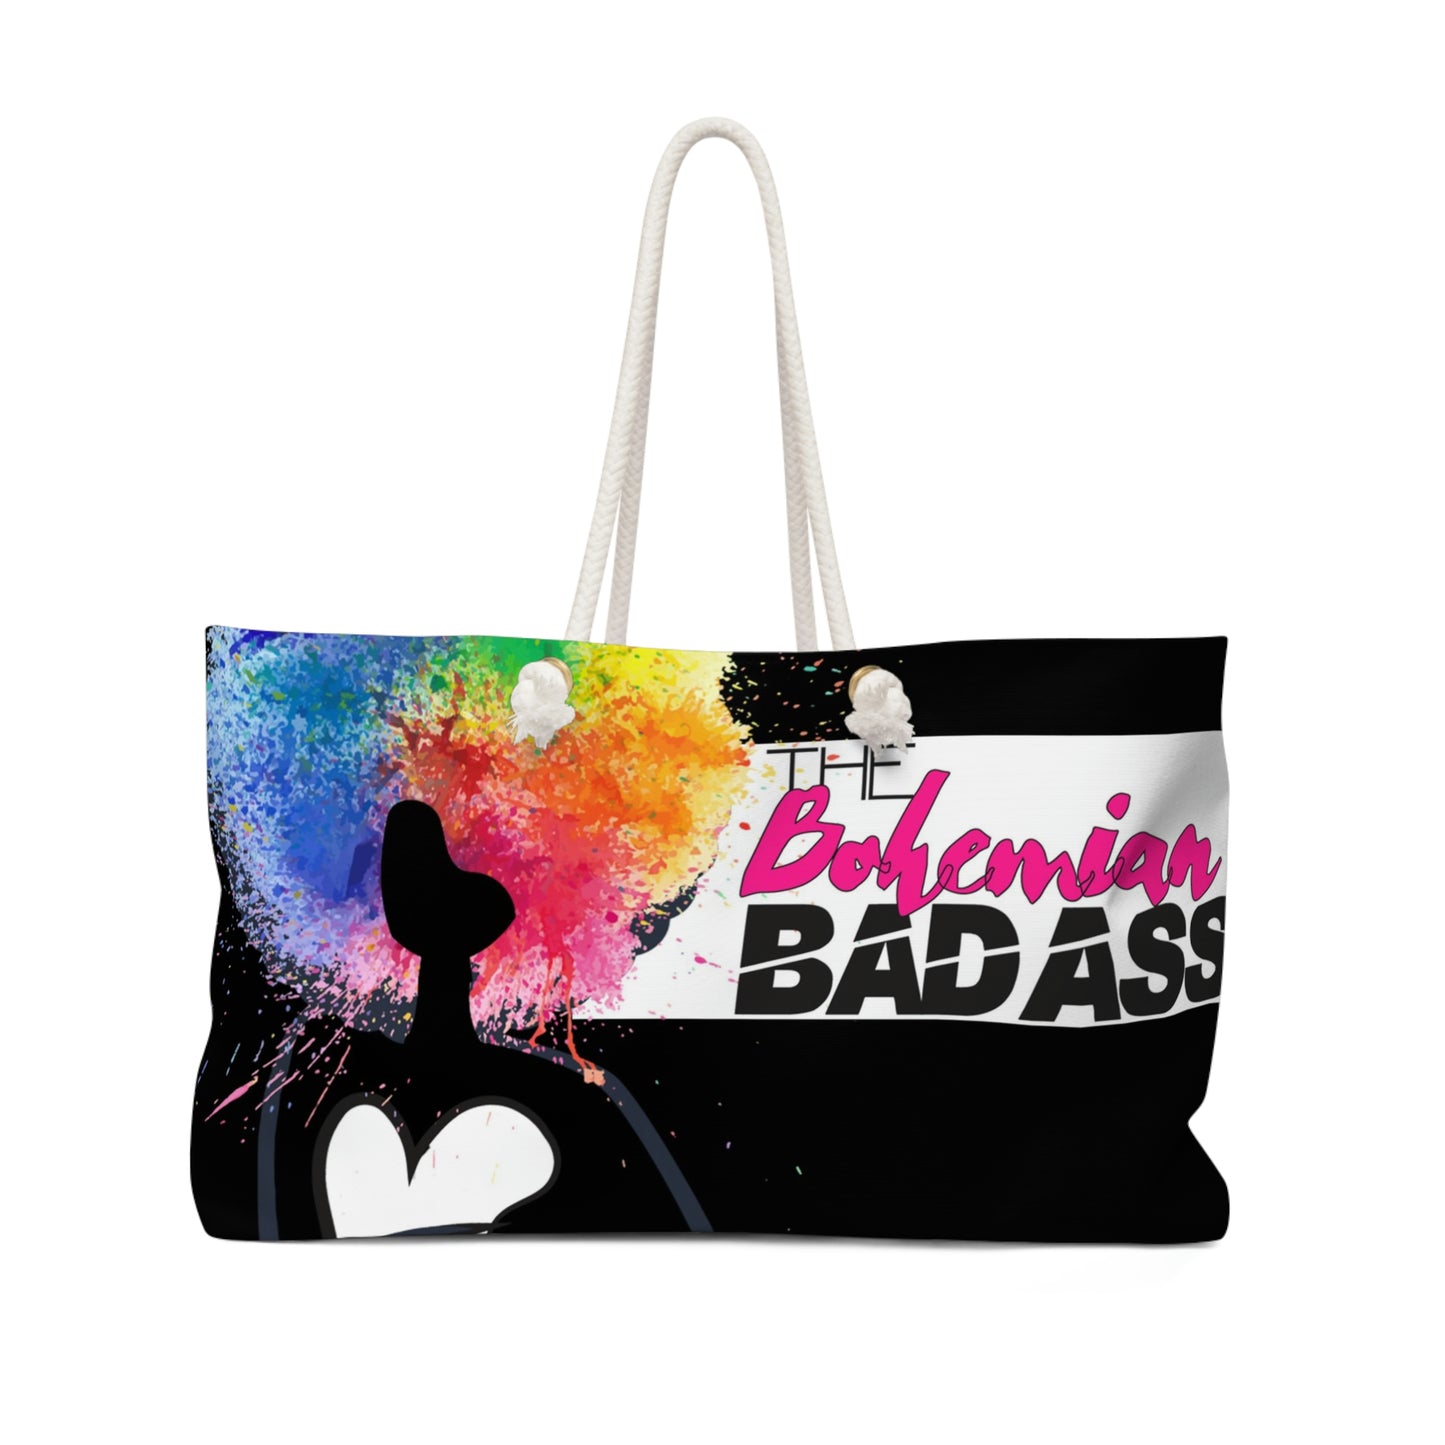 B-Badass Weekender Bag